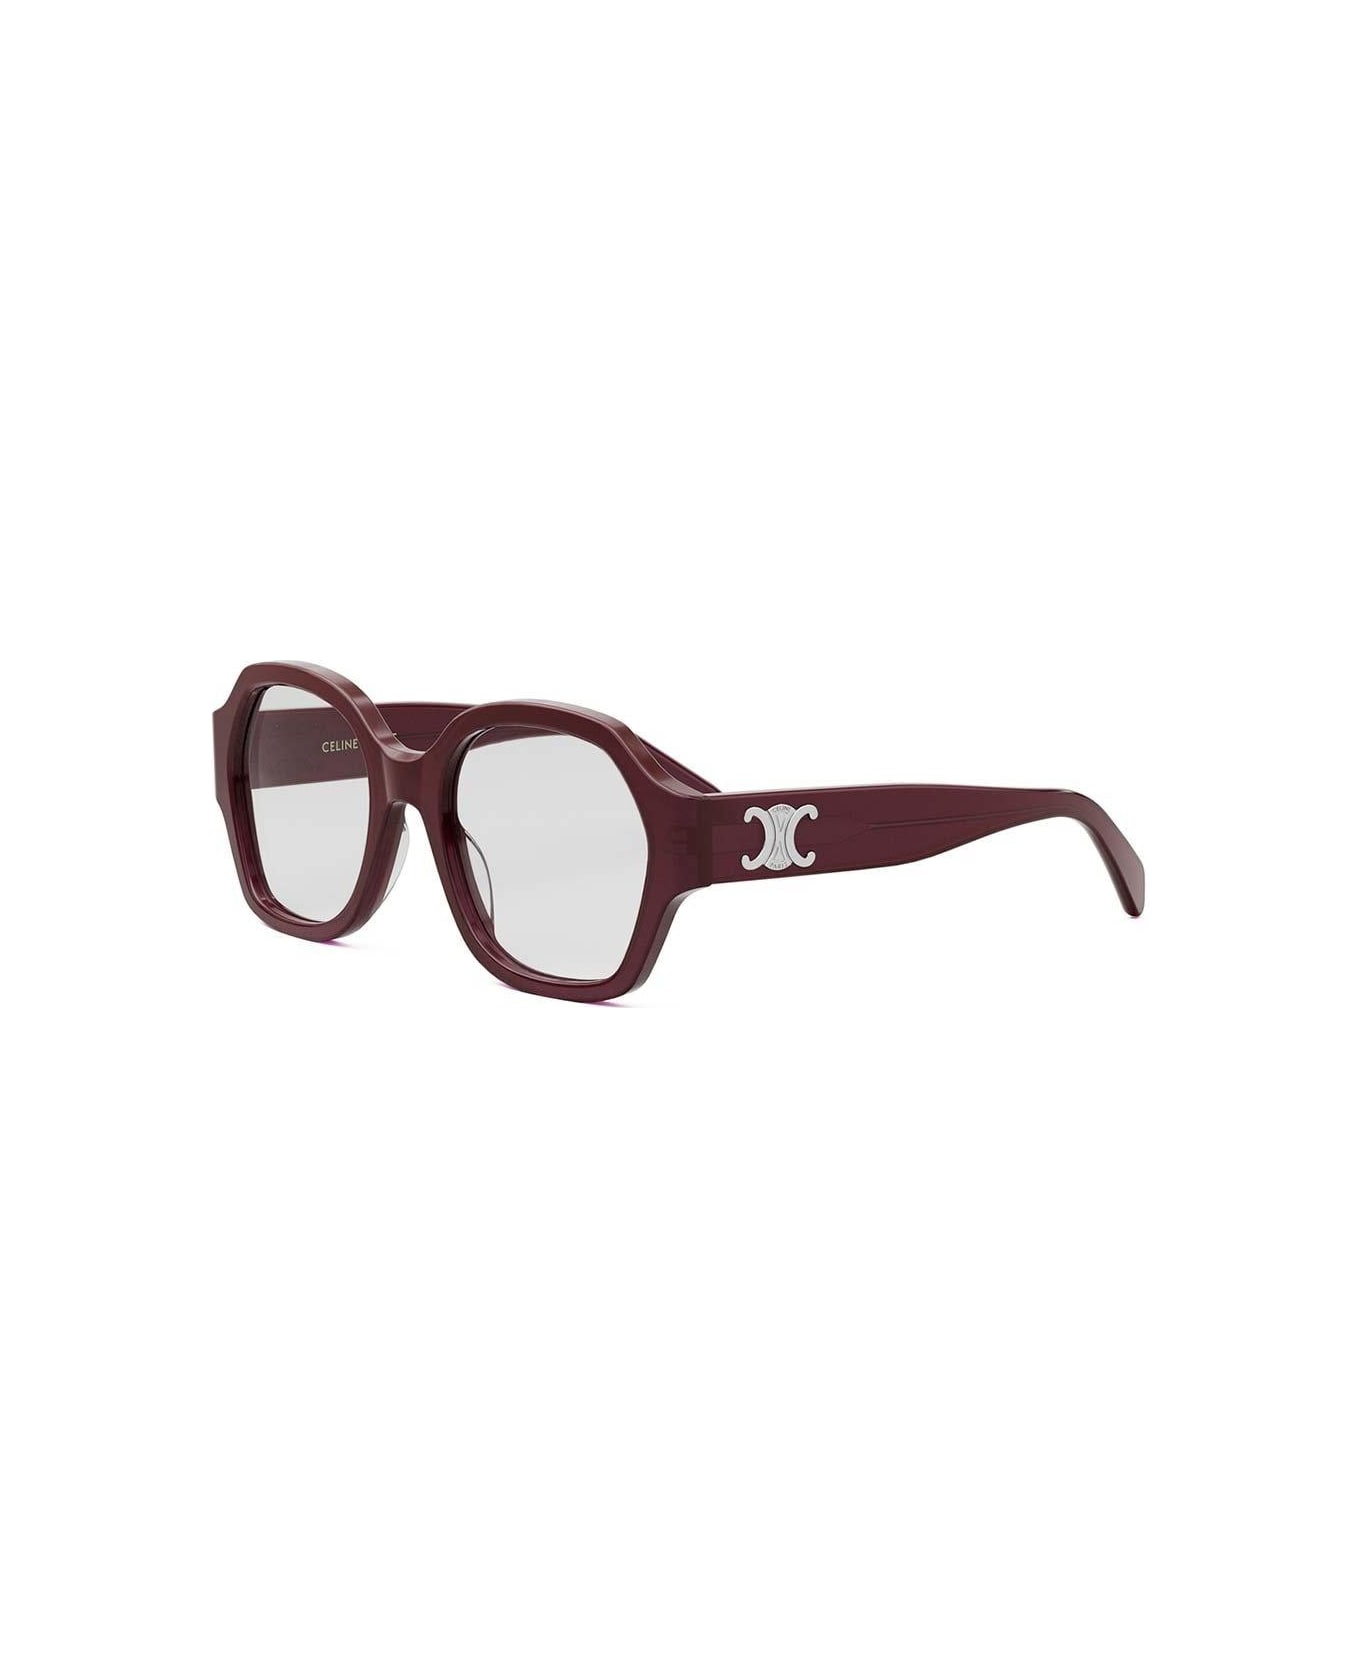 Celine Square Frame Glasses - 069